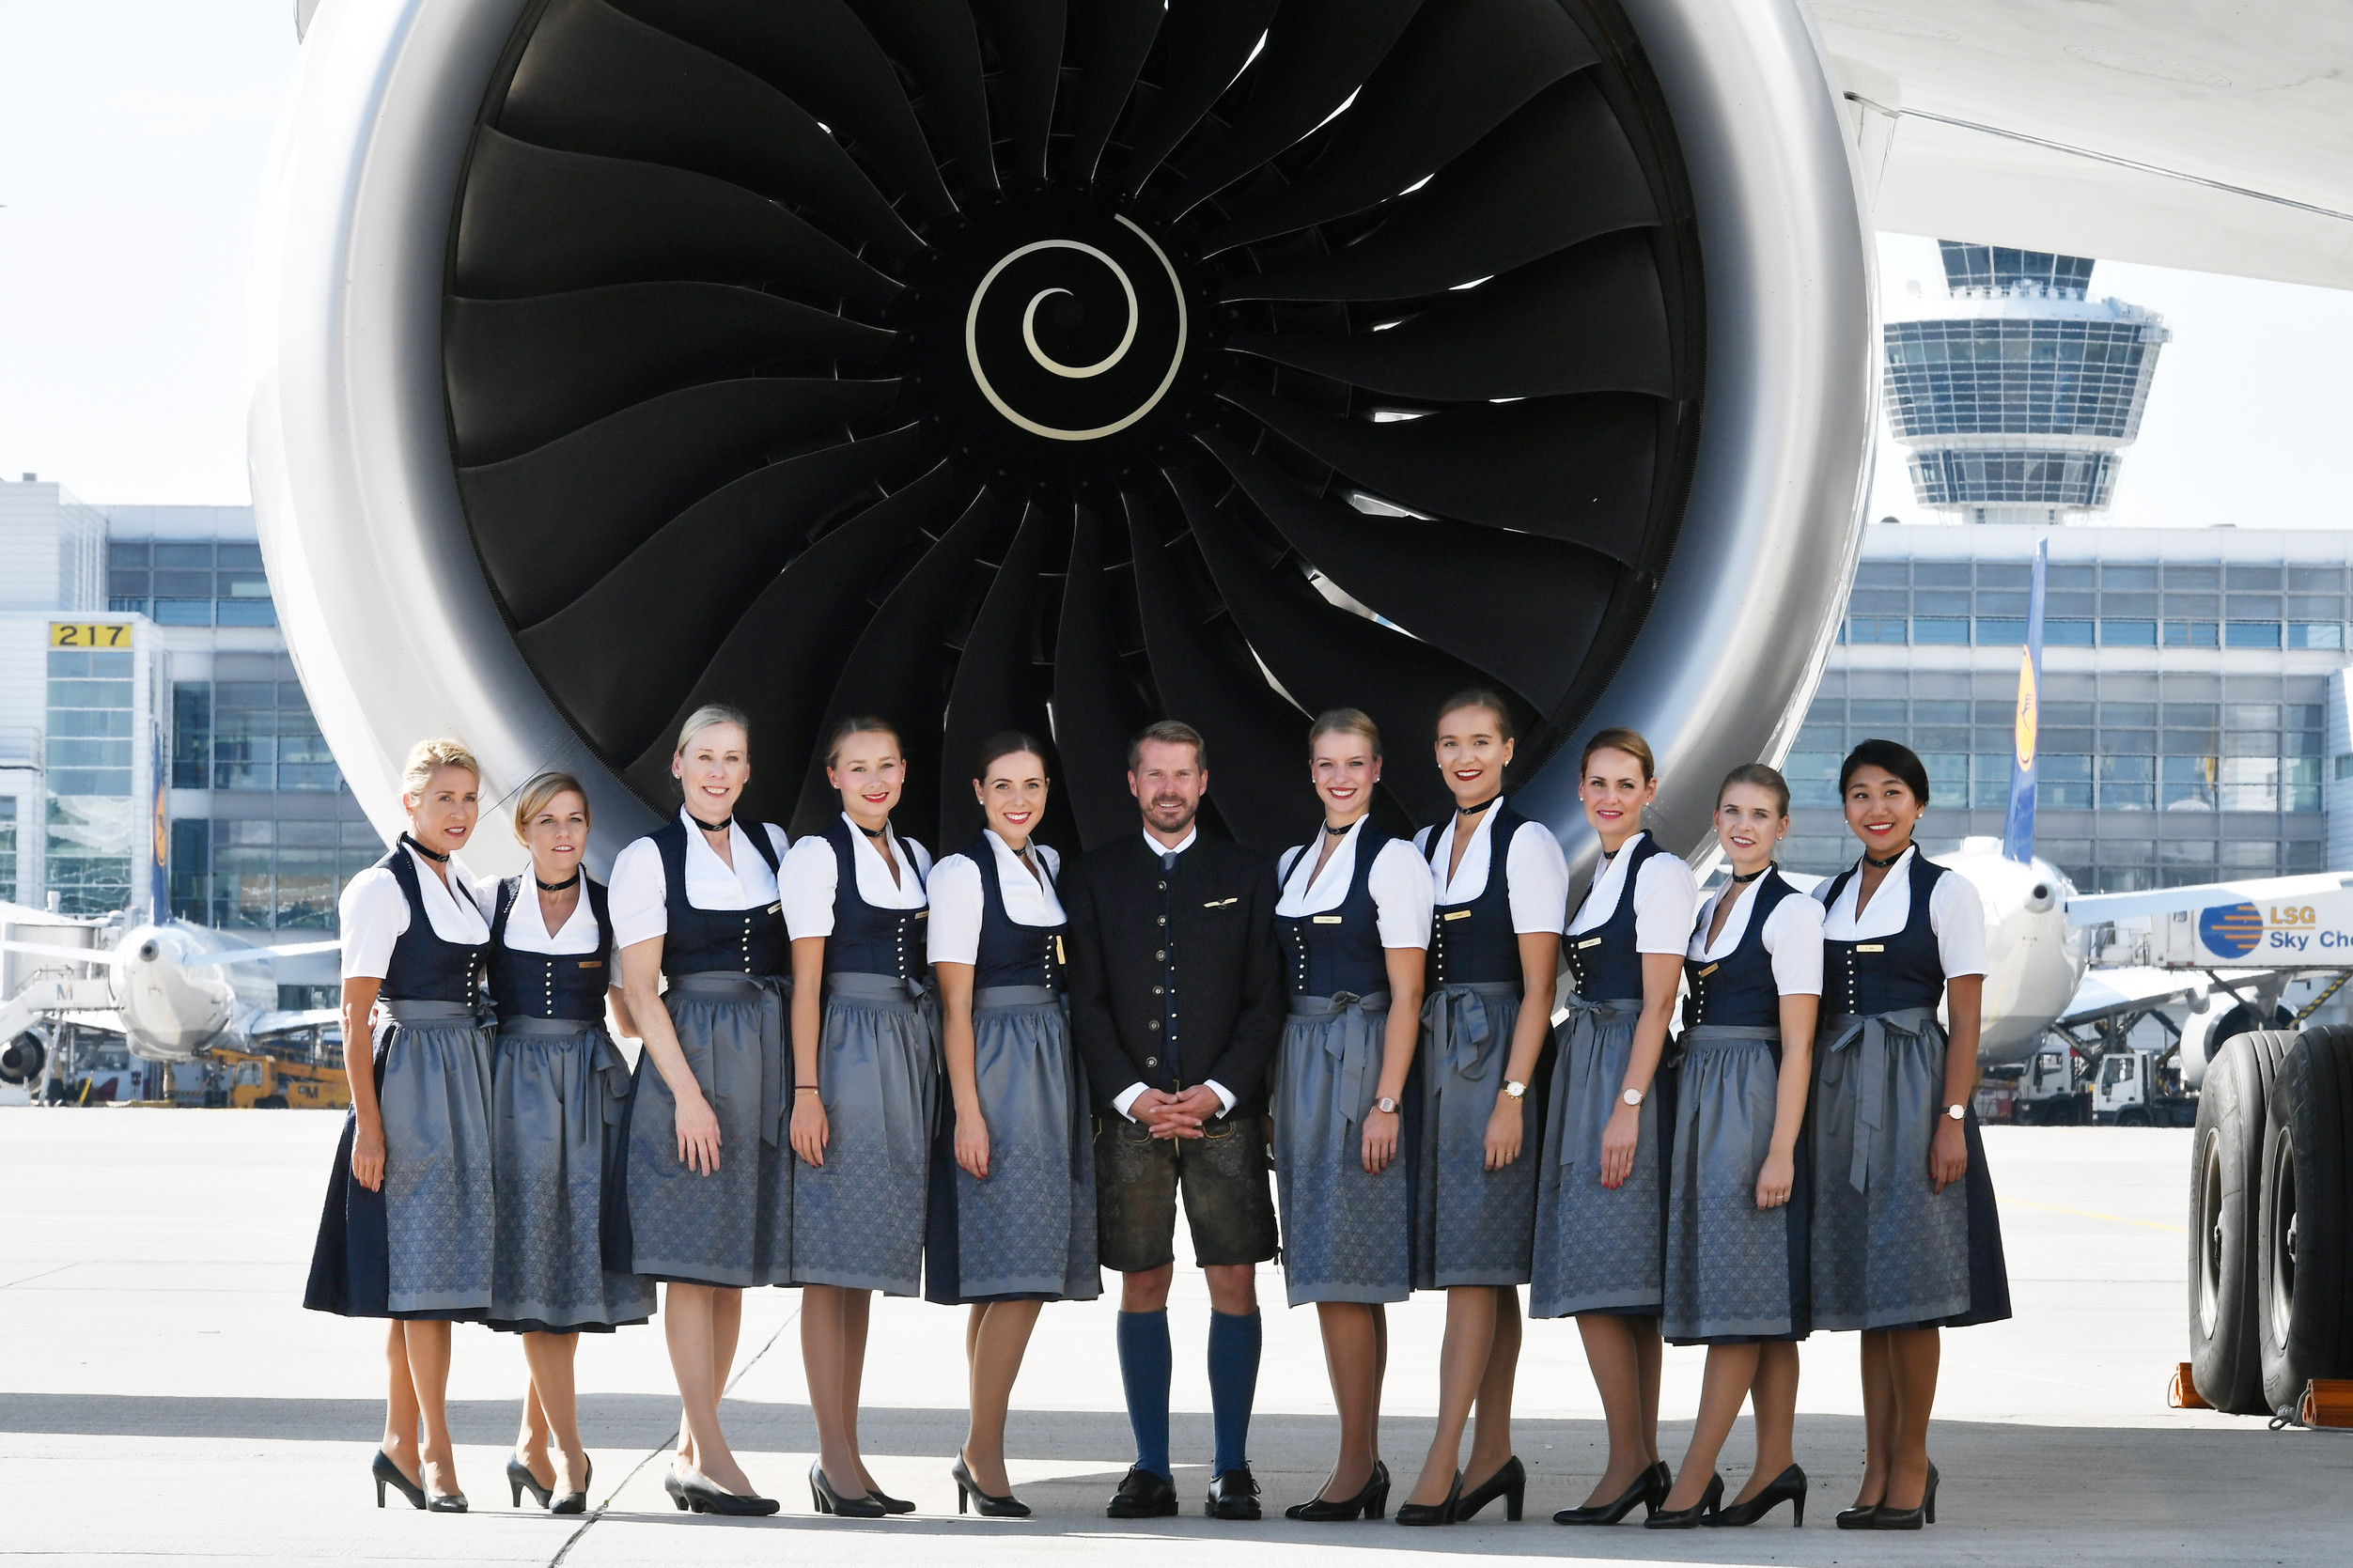 southwest airlines flight attendants